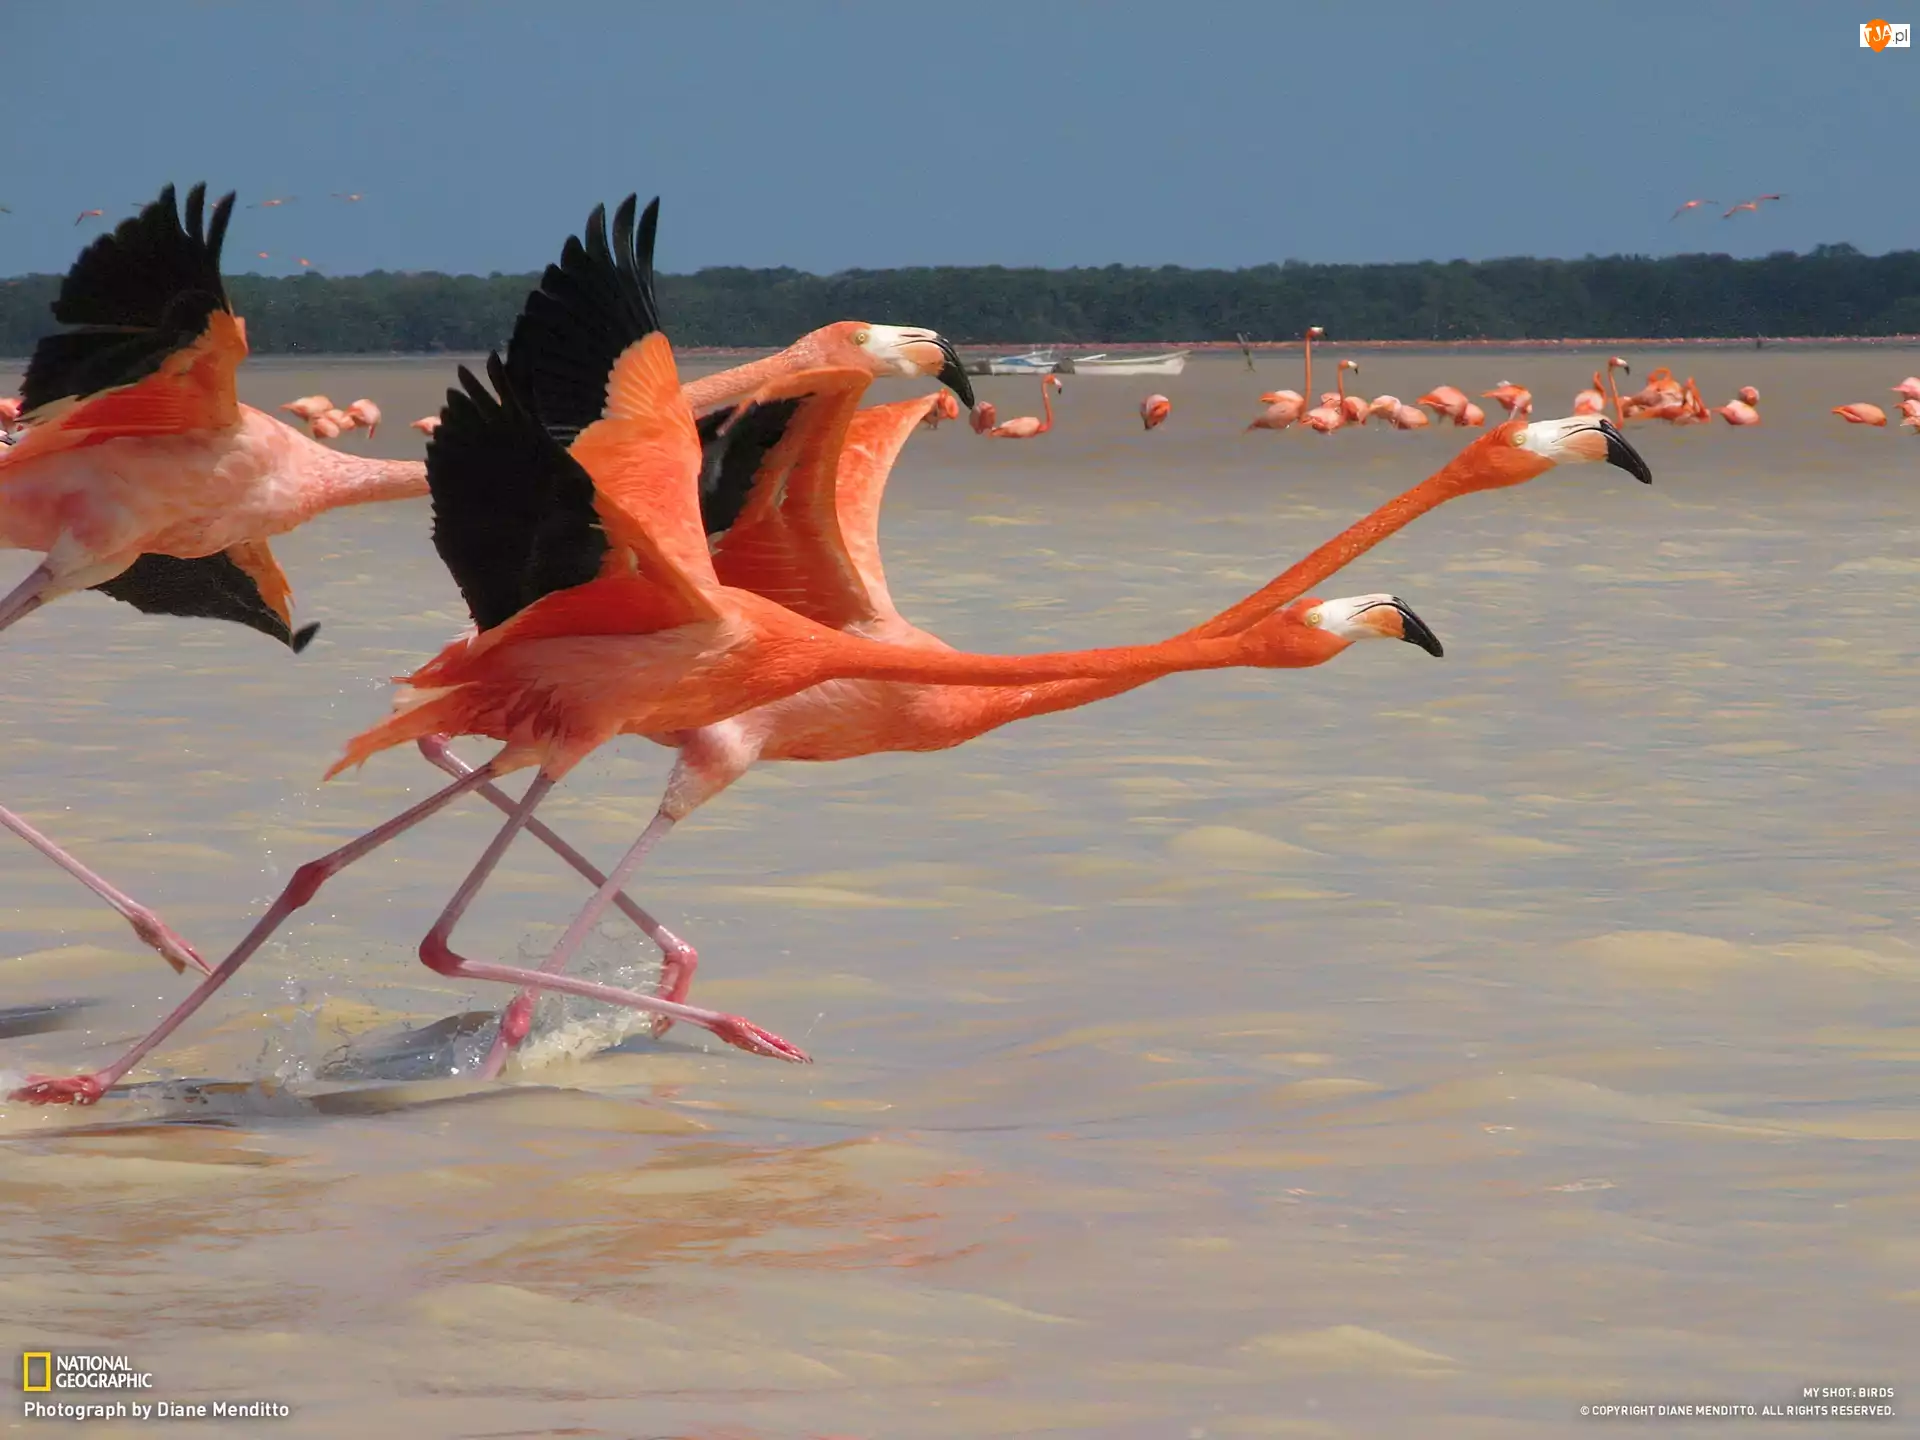 Czerwonaki, Flamingi